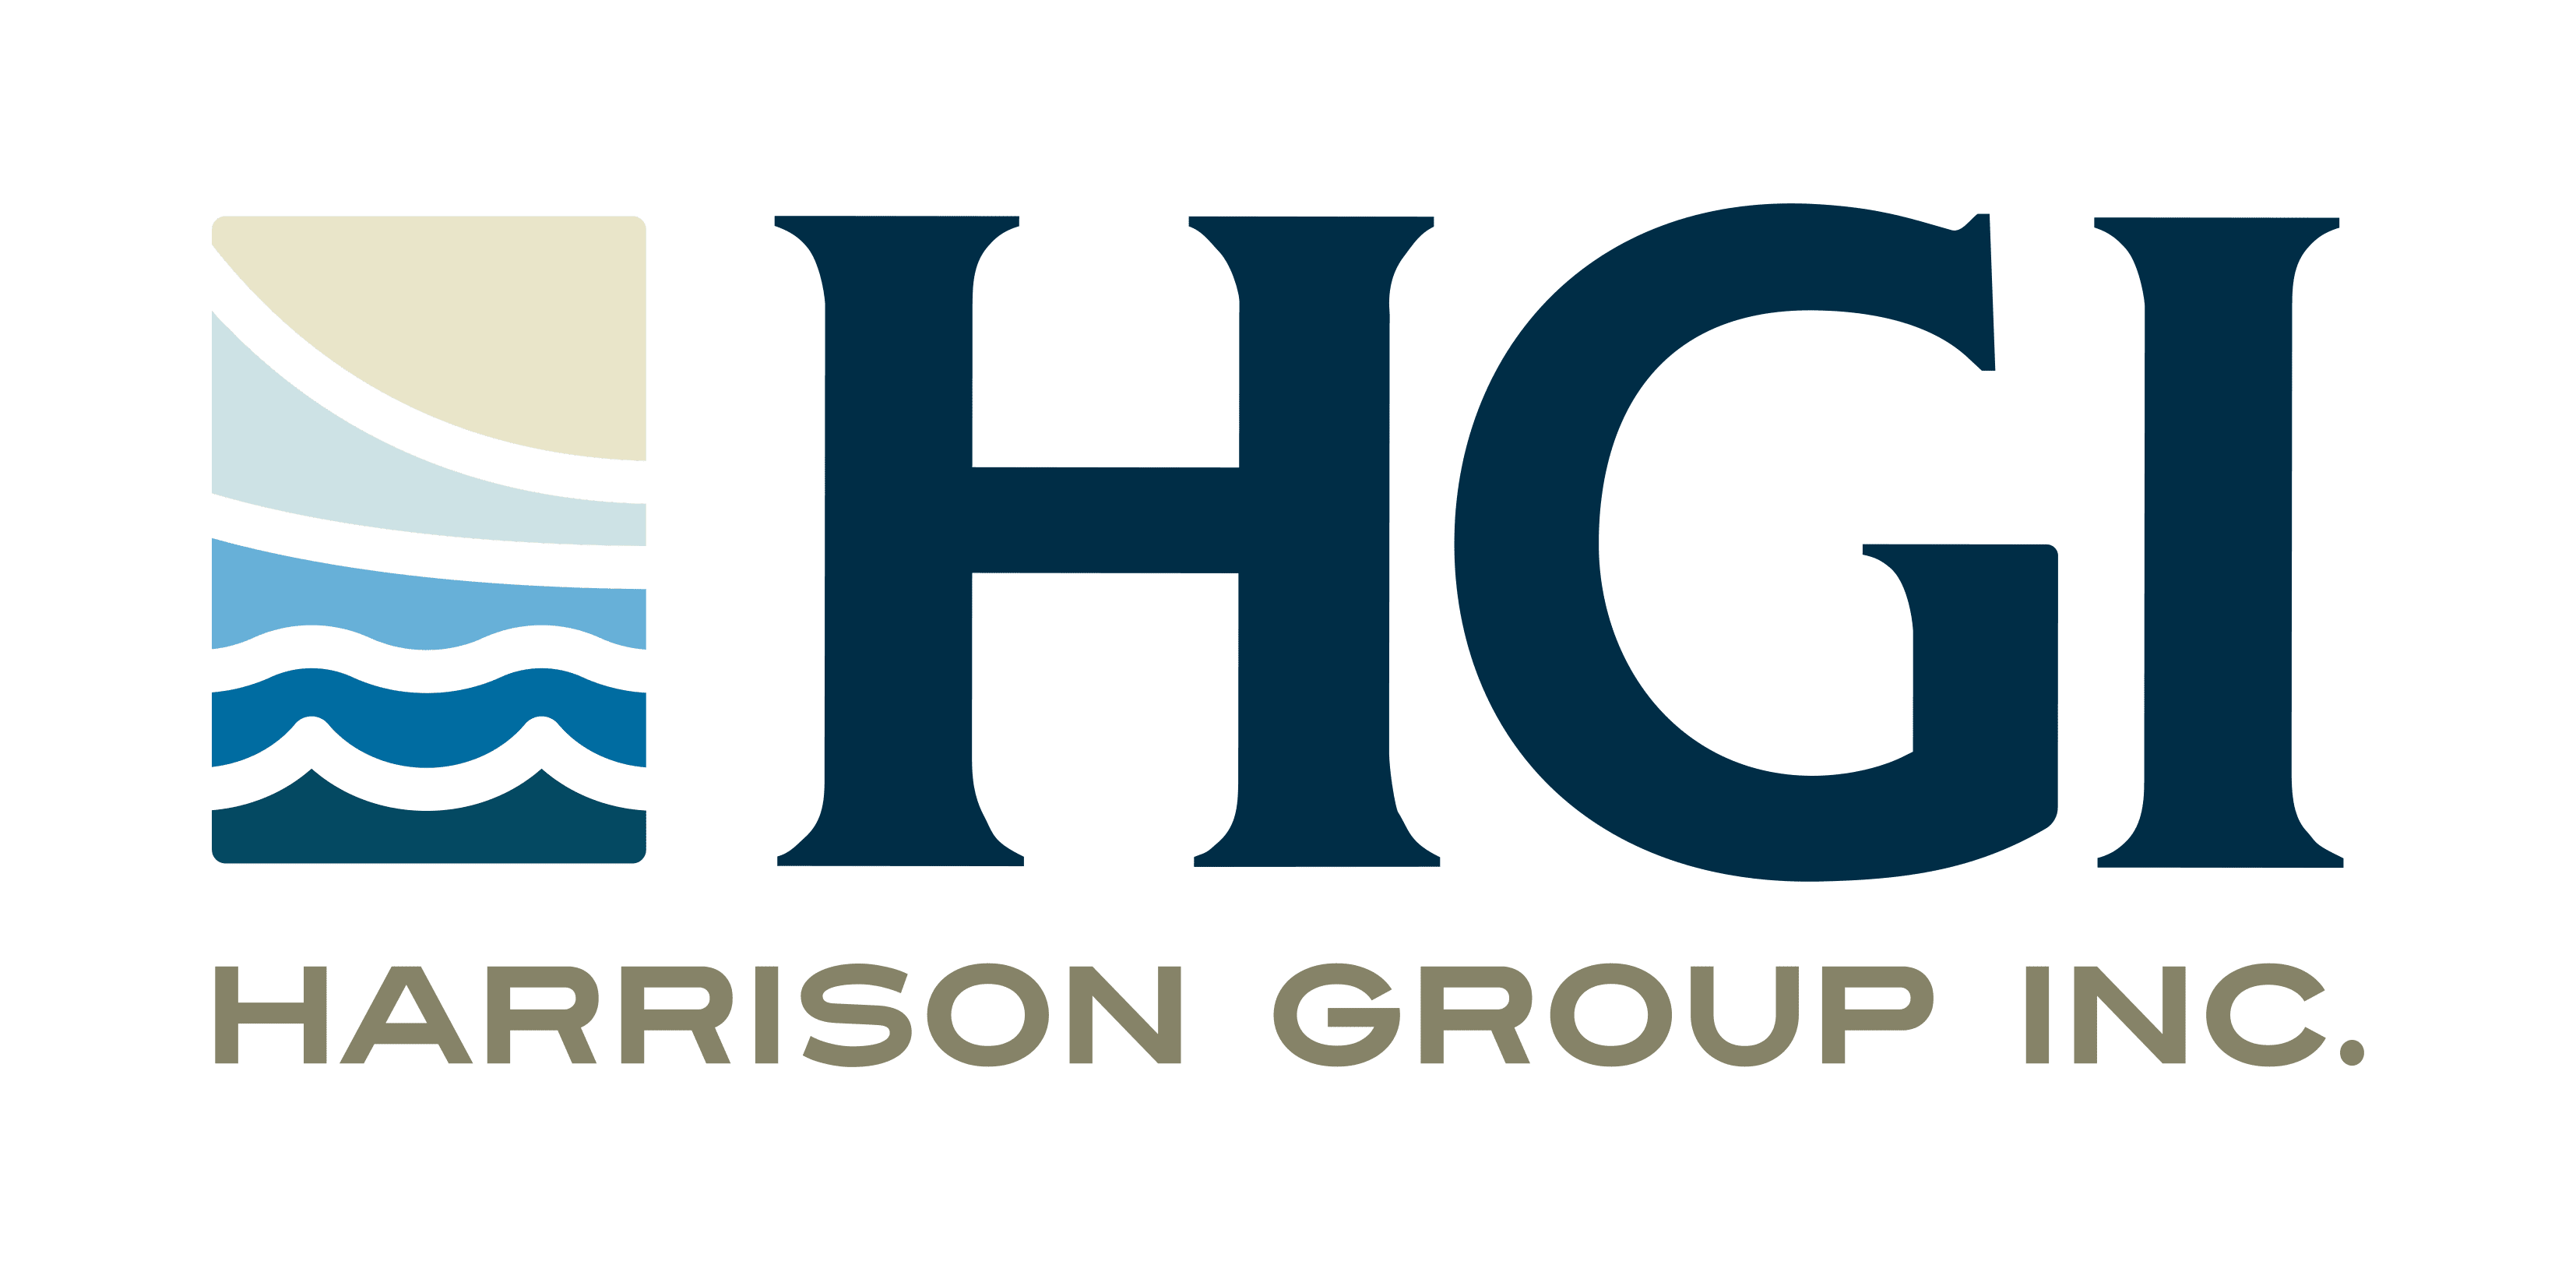 Harrison Group Inc.